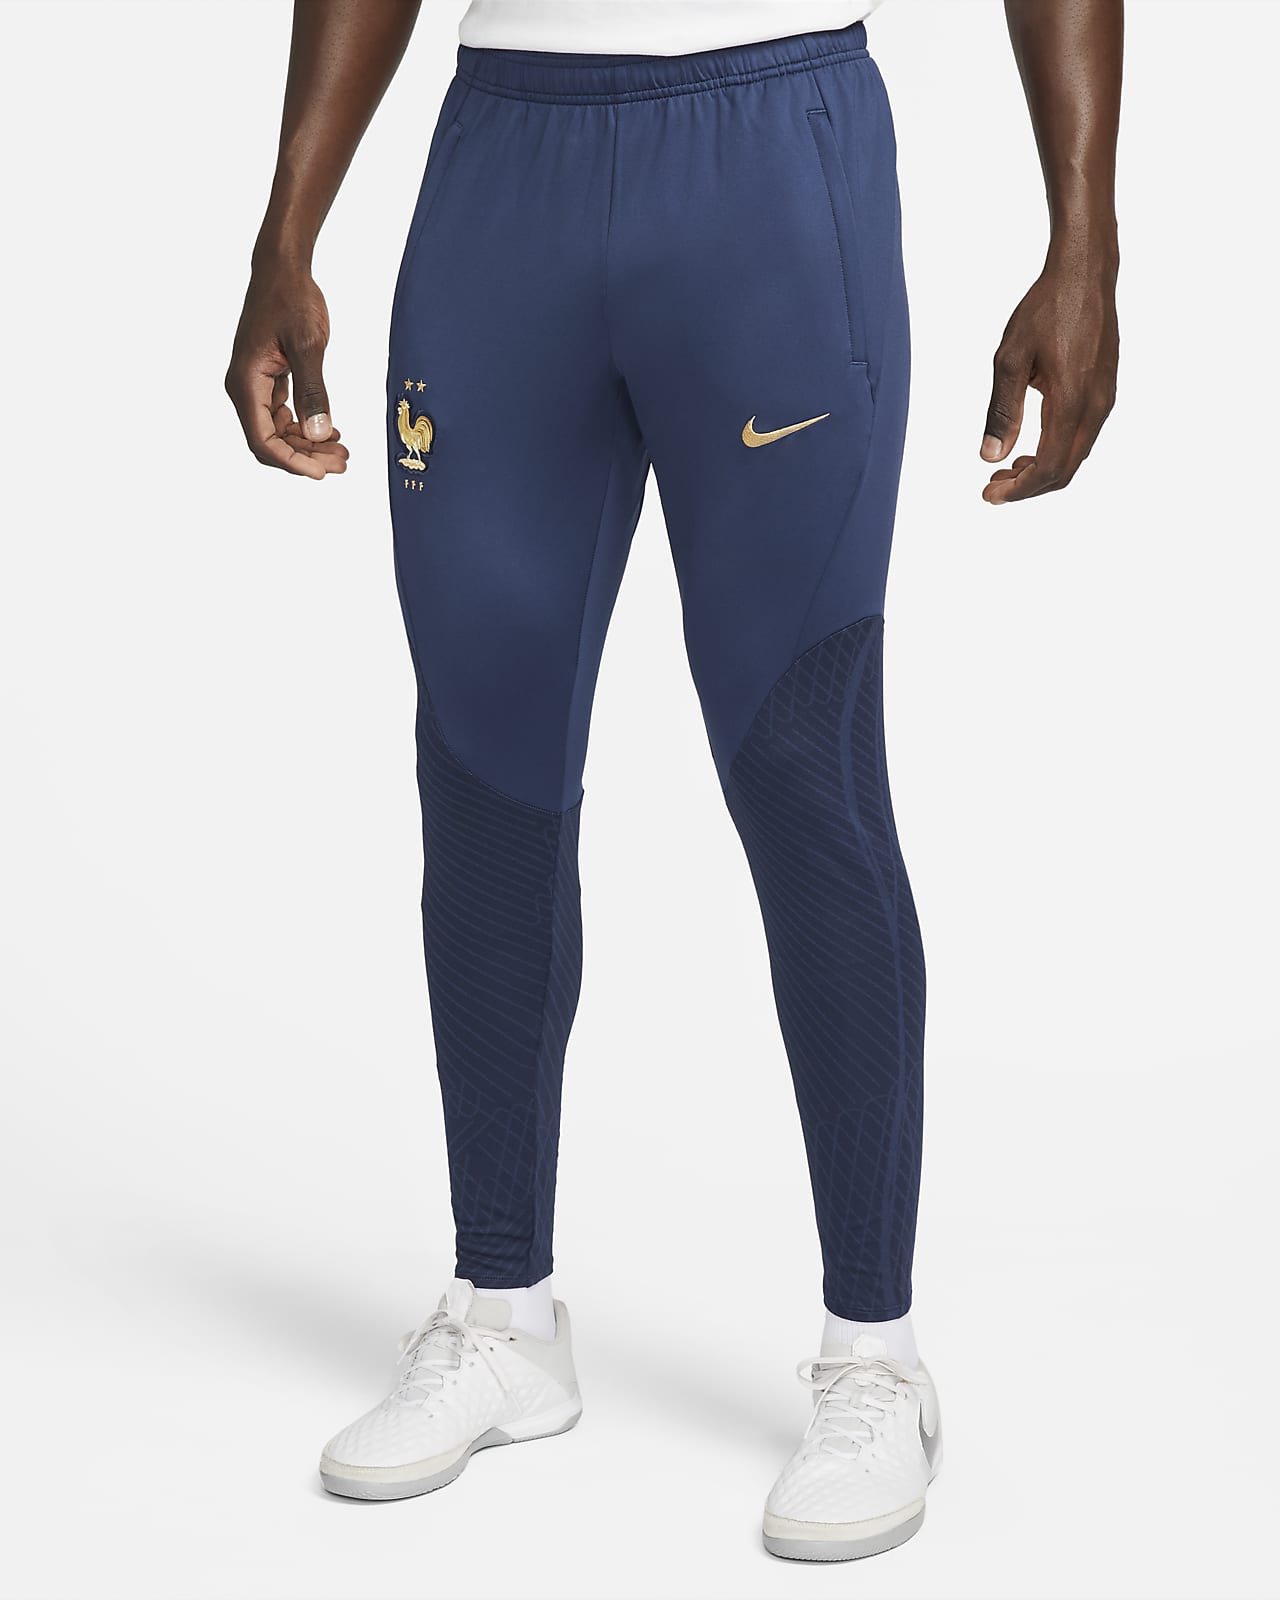 FFF Strike Men's Nike Dri-FIT Knit Soccer Pants